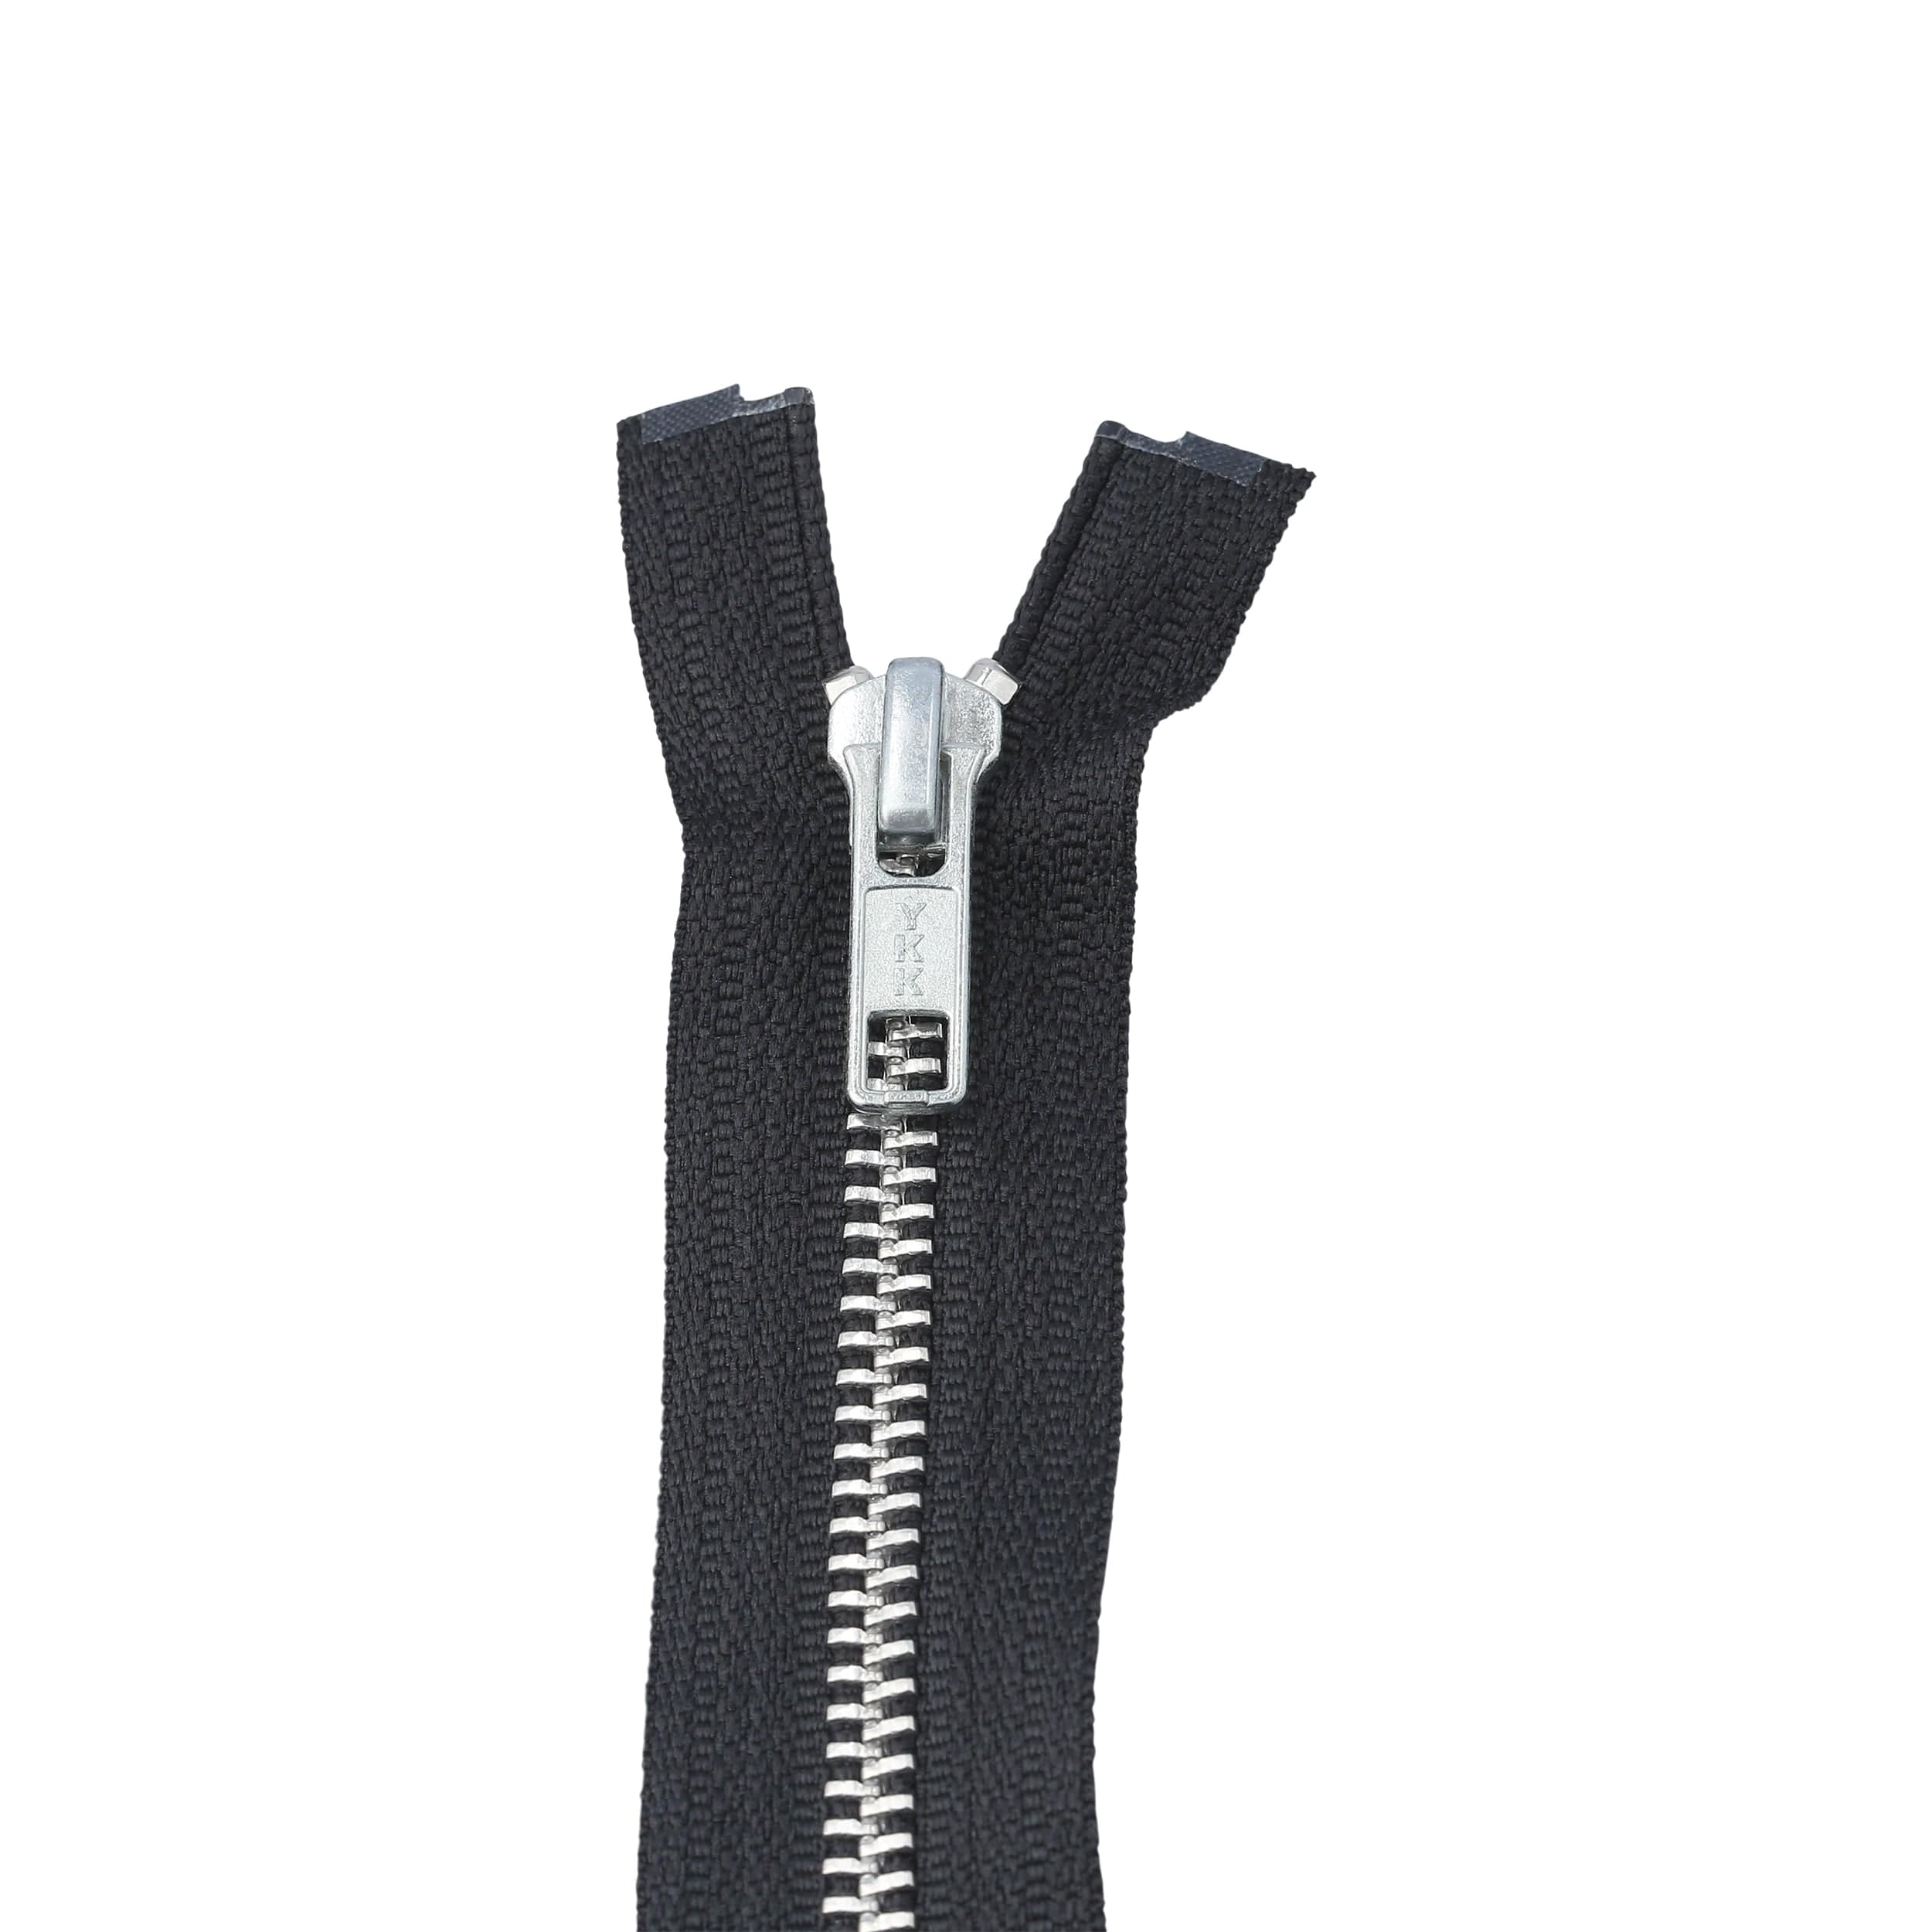 Ohio Travel Bag-Zippers-#5 Metal, Black, 20 YKK Separating Jacket Zipper  with Aluminum Teeth, #6JK-20-BLK-N-$2.30